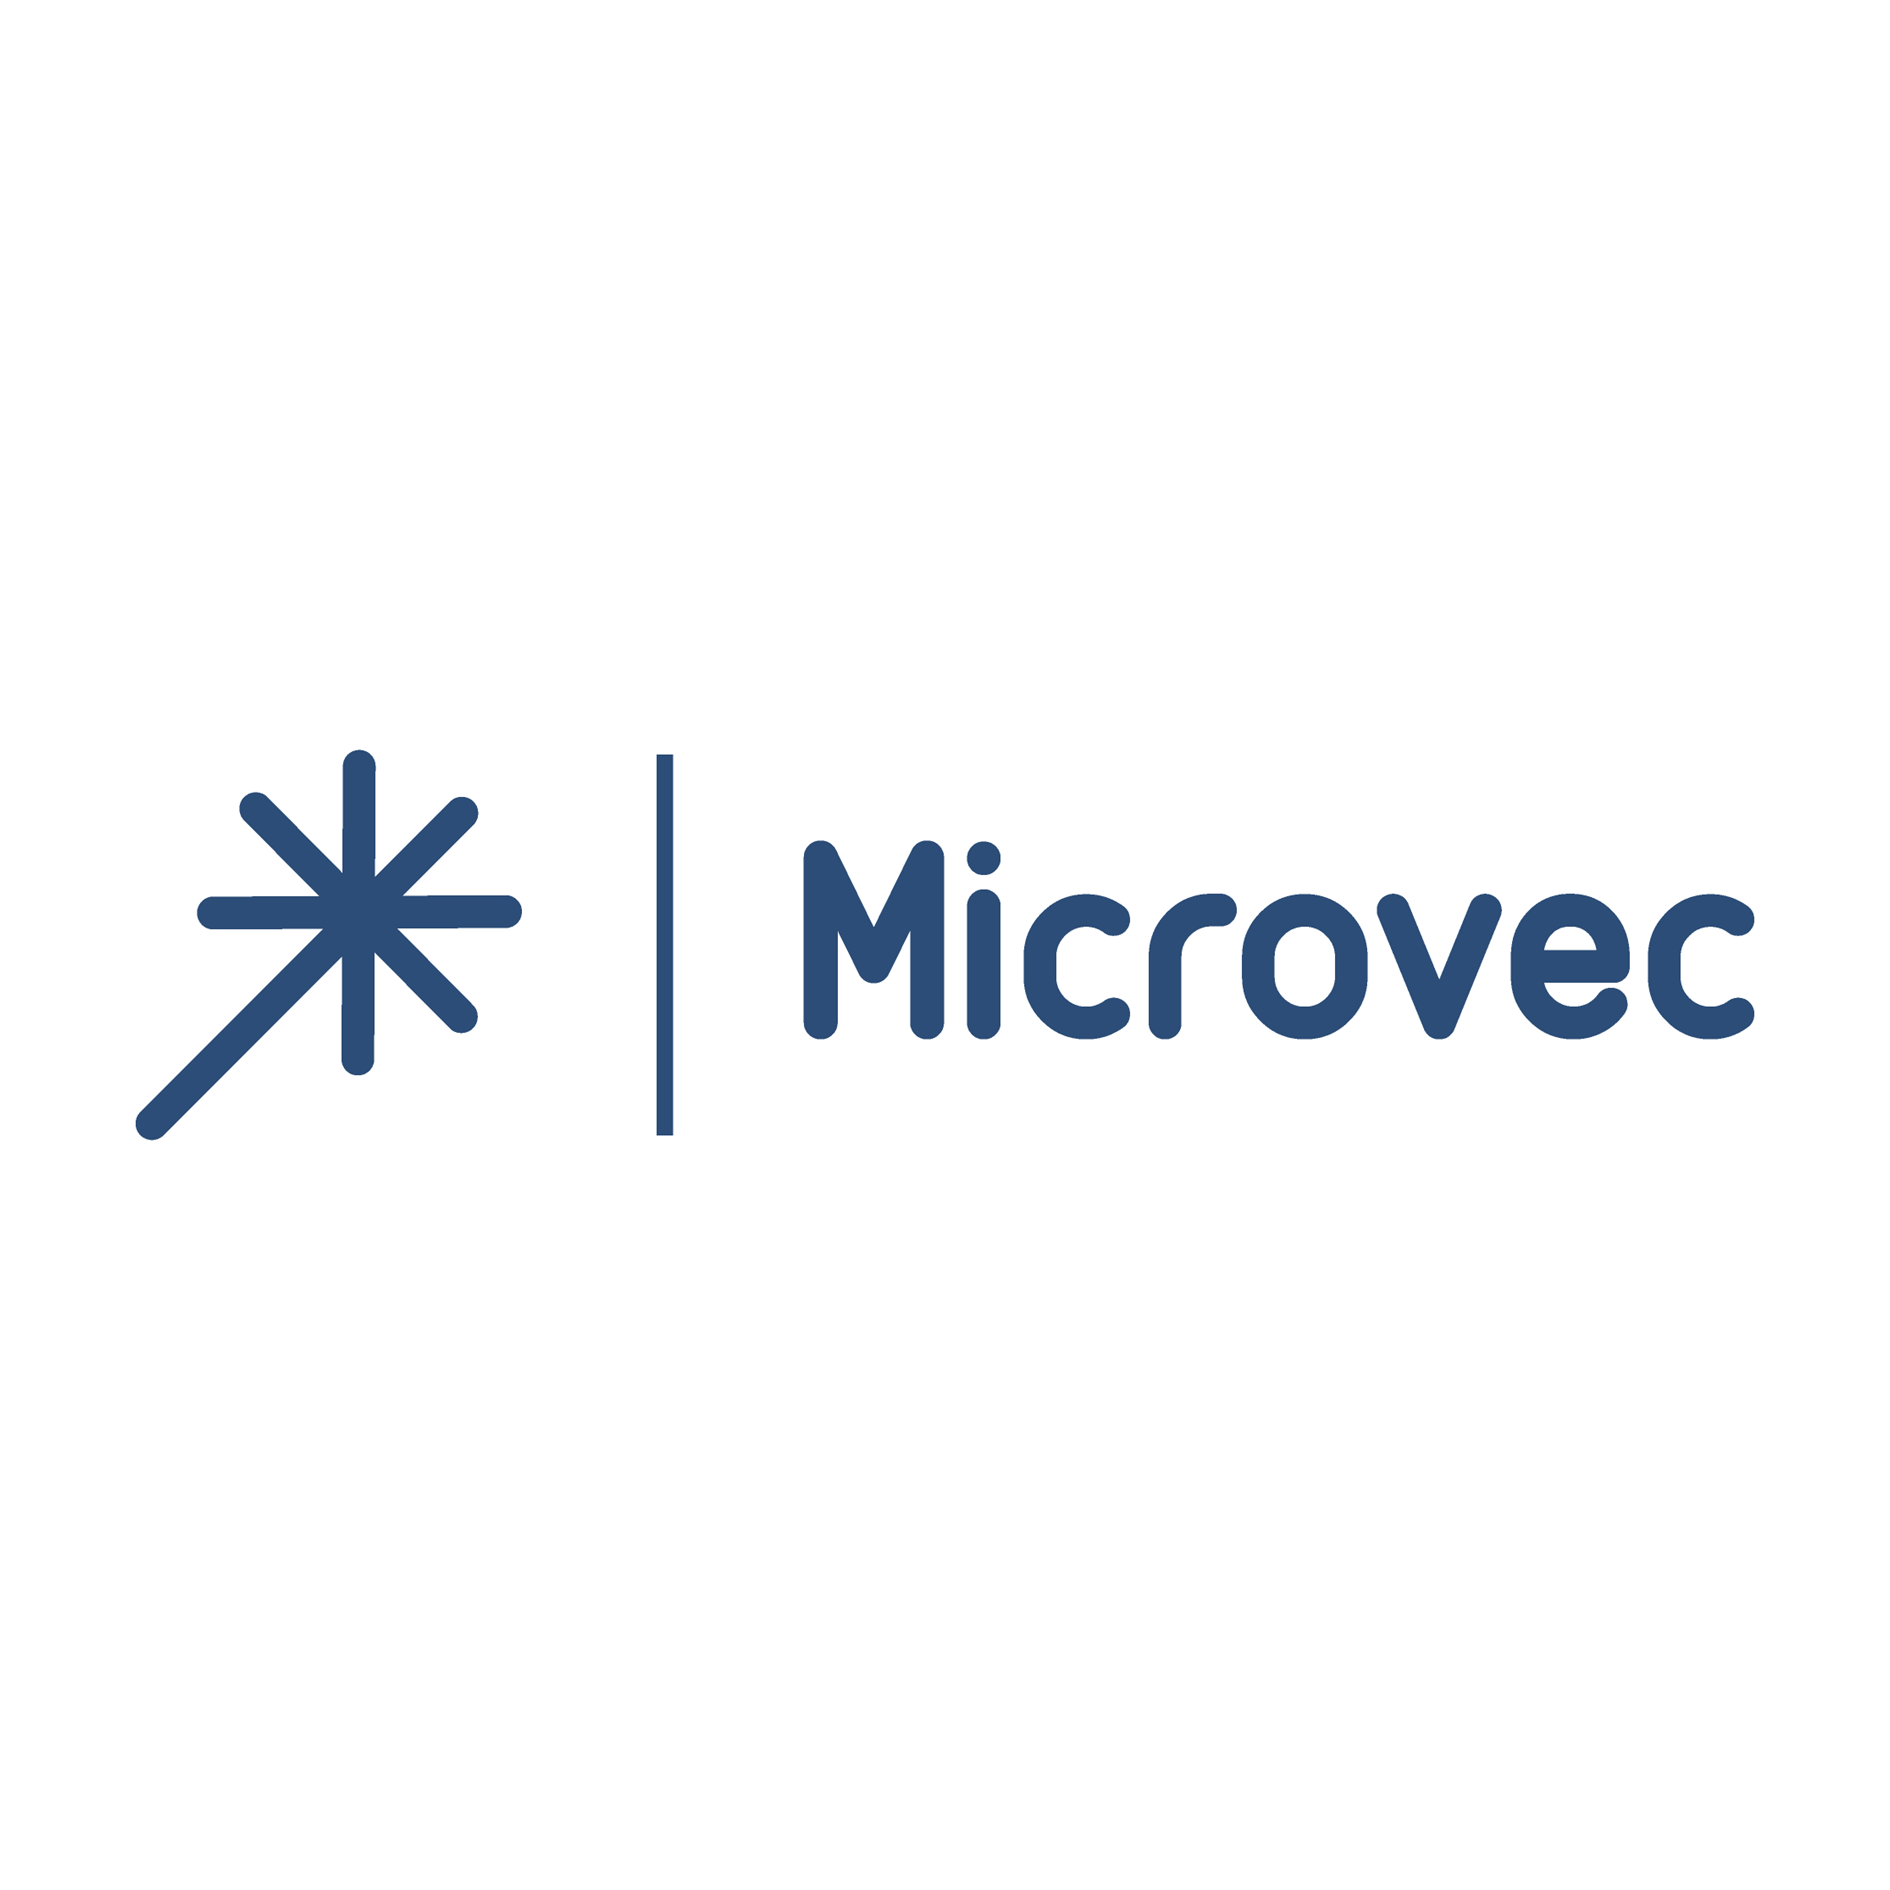 Microvec